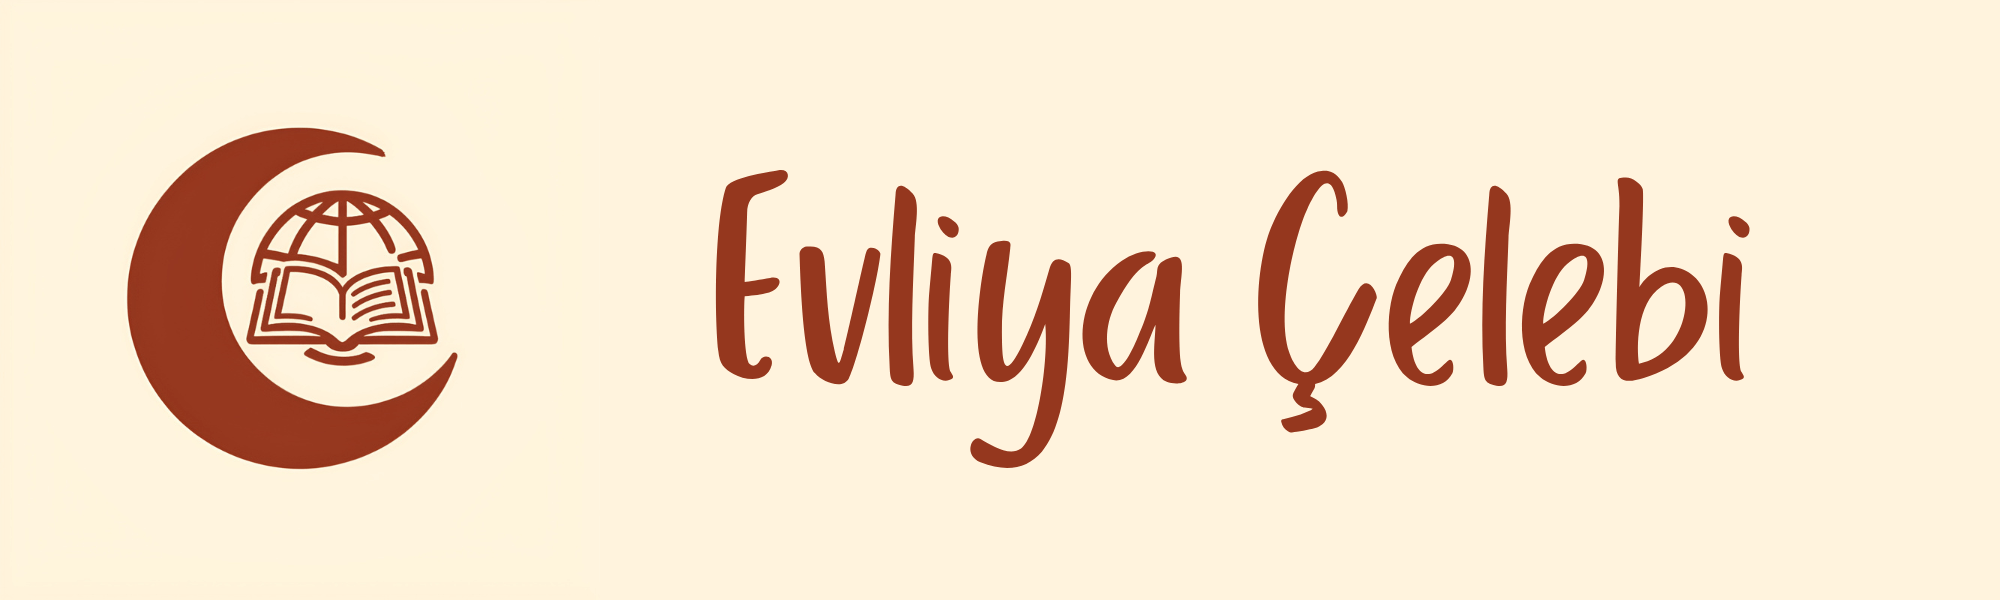 Evliya Çelebi Logo Draft (1)